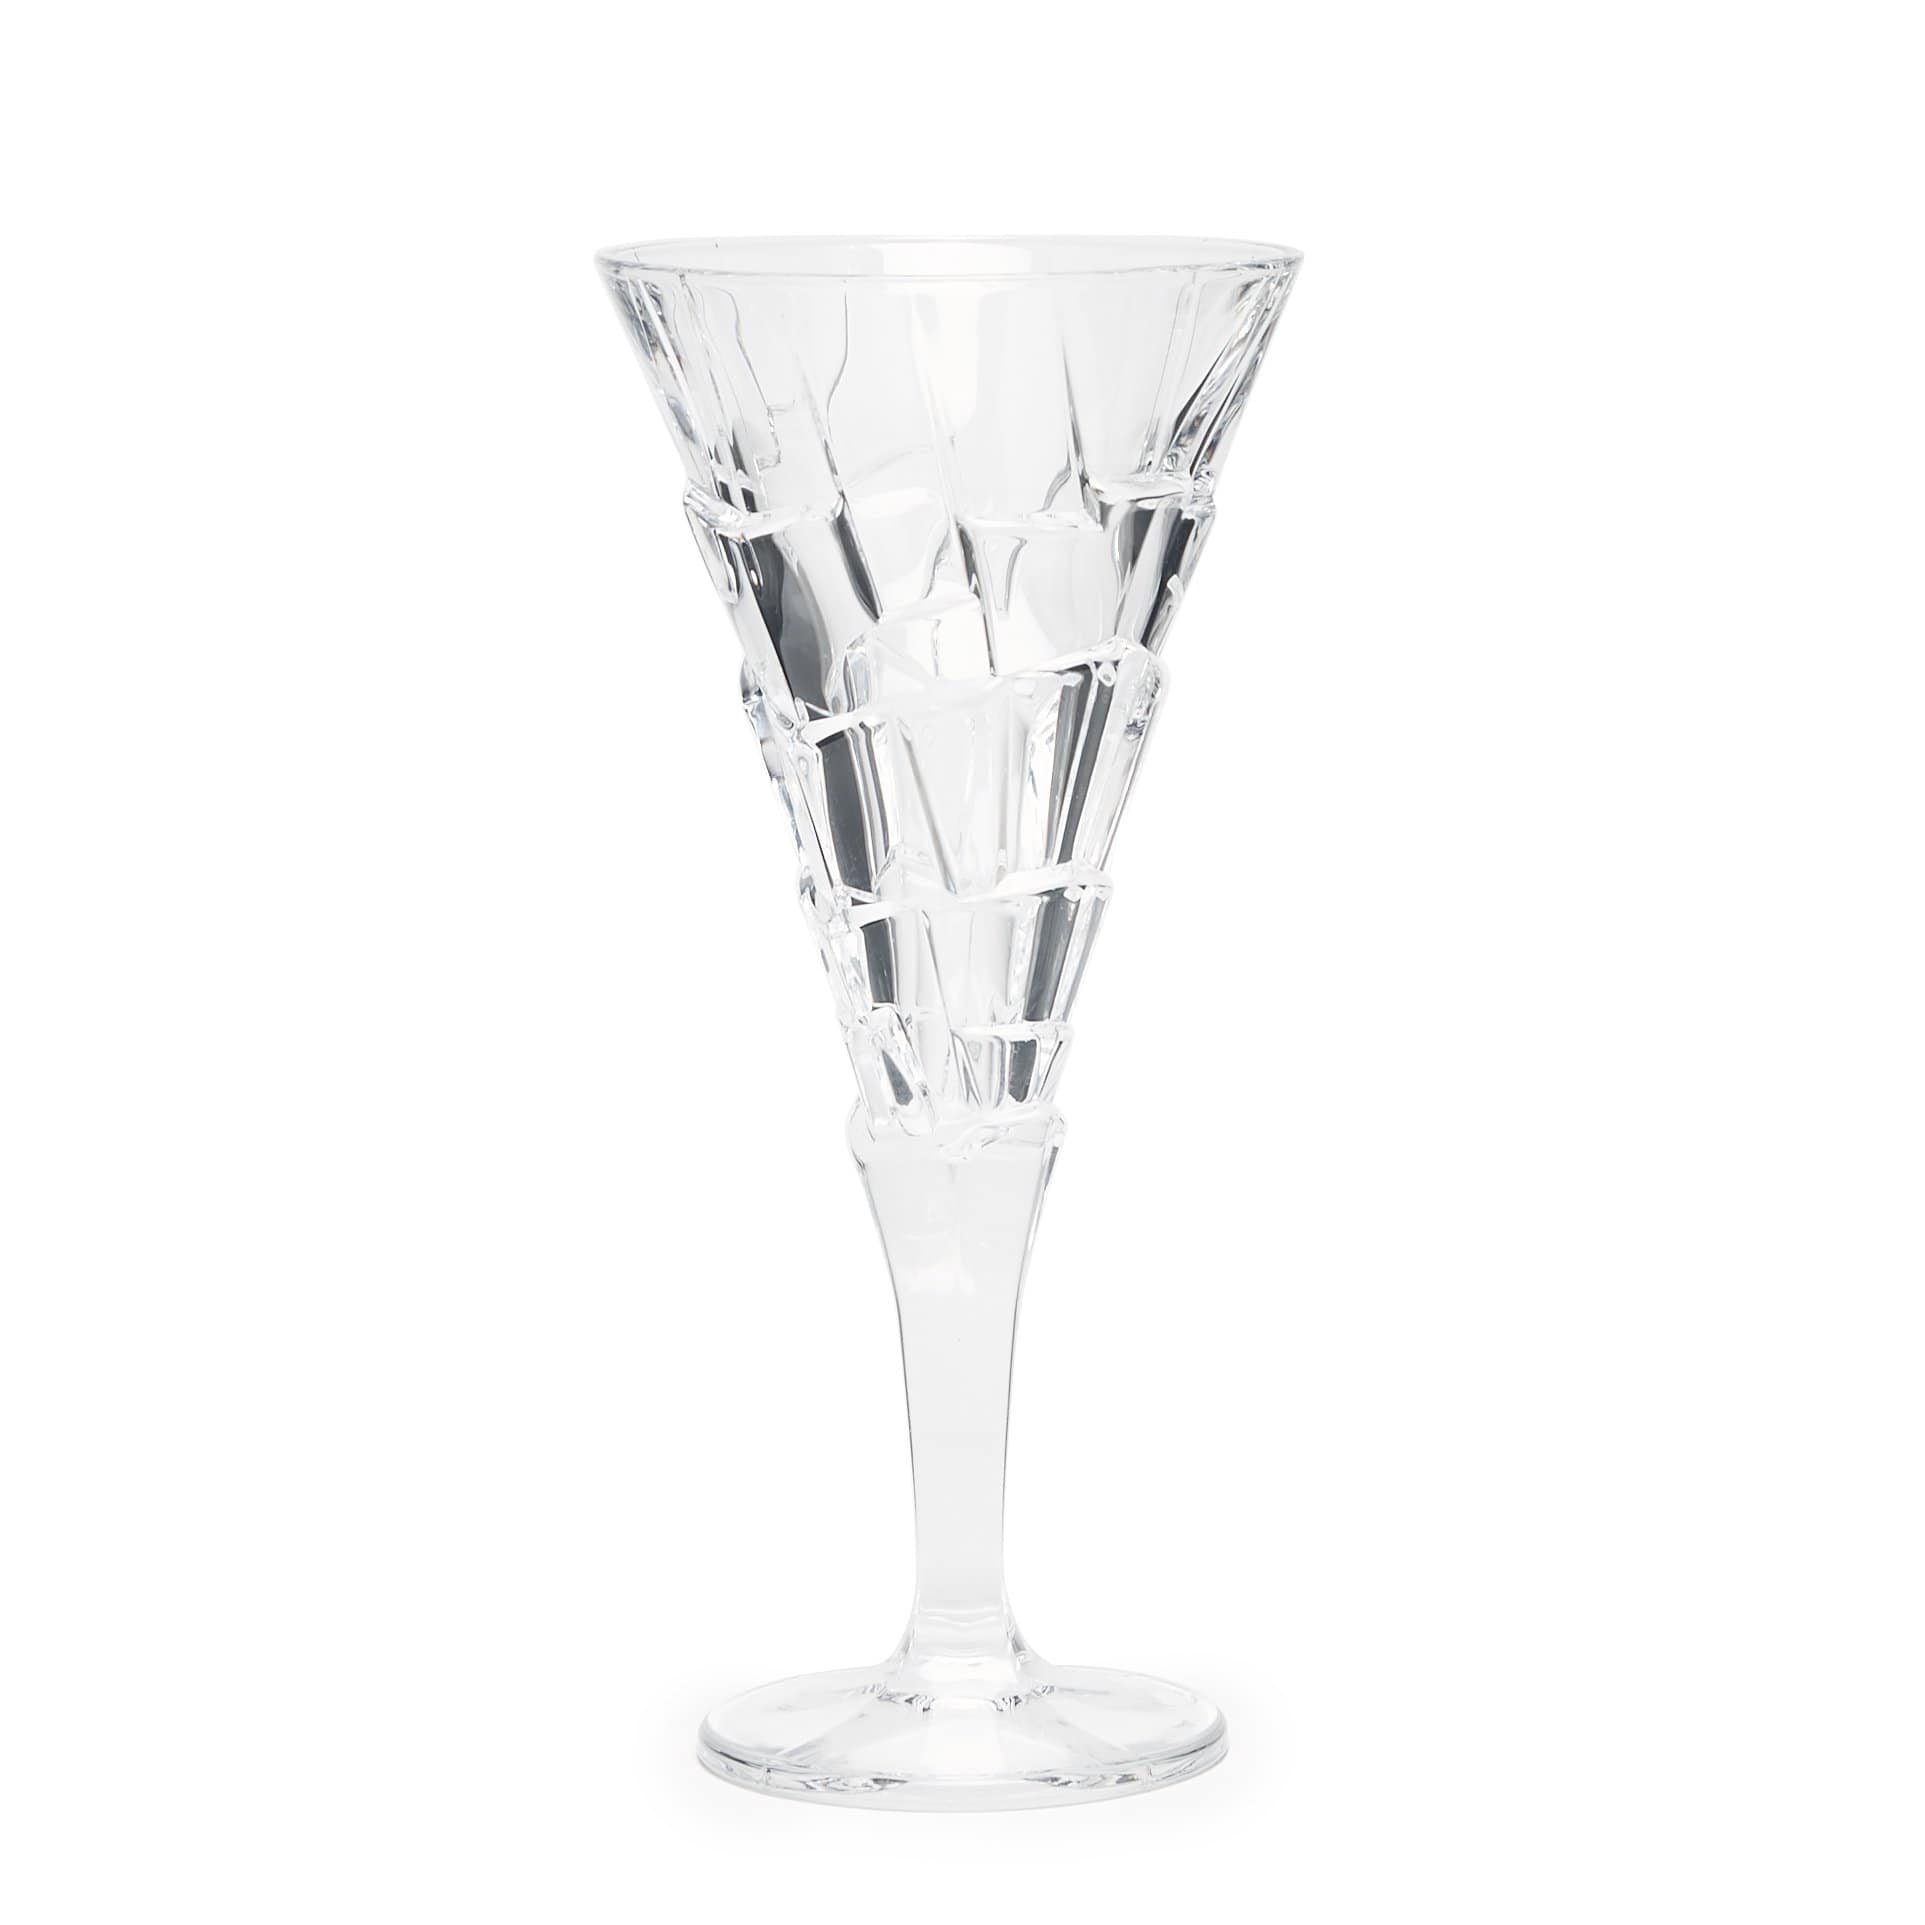 BOHEMIA CRYSTAL CRACK WINE GLASS SET OF 6